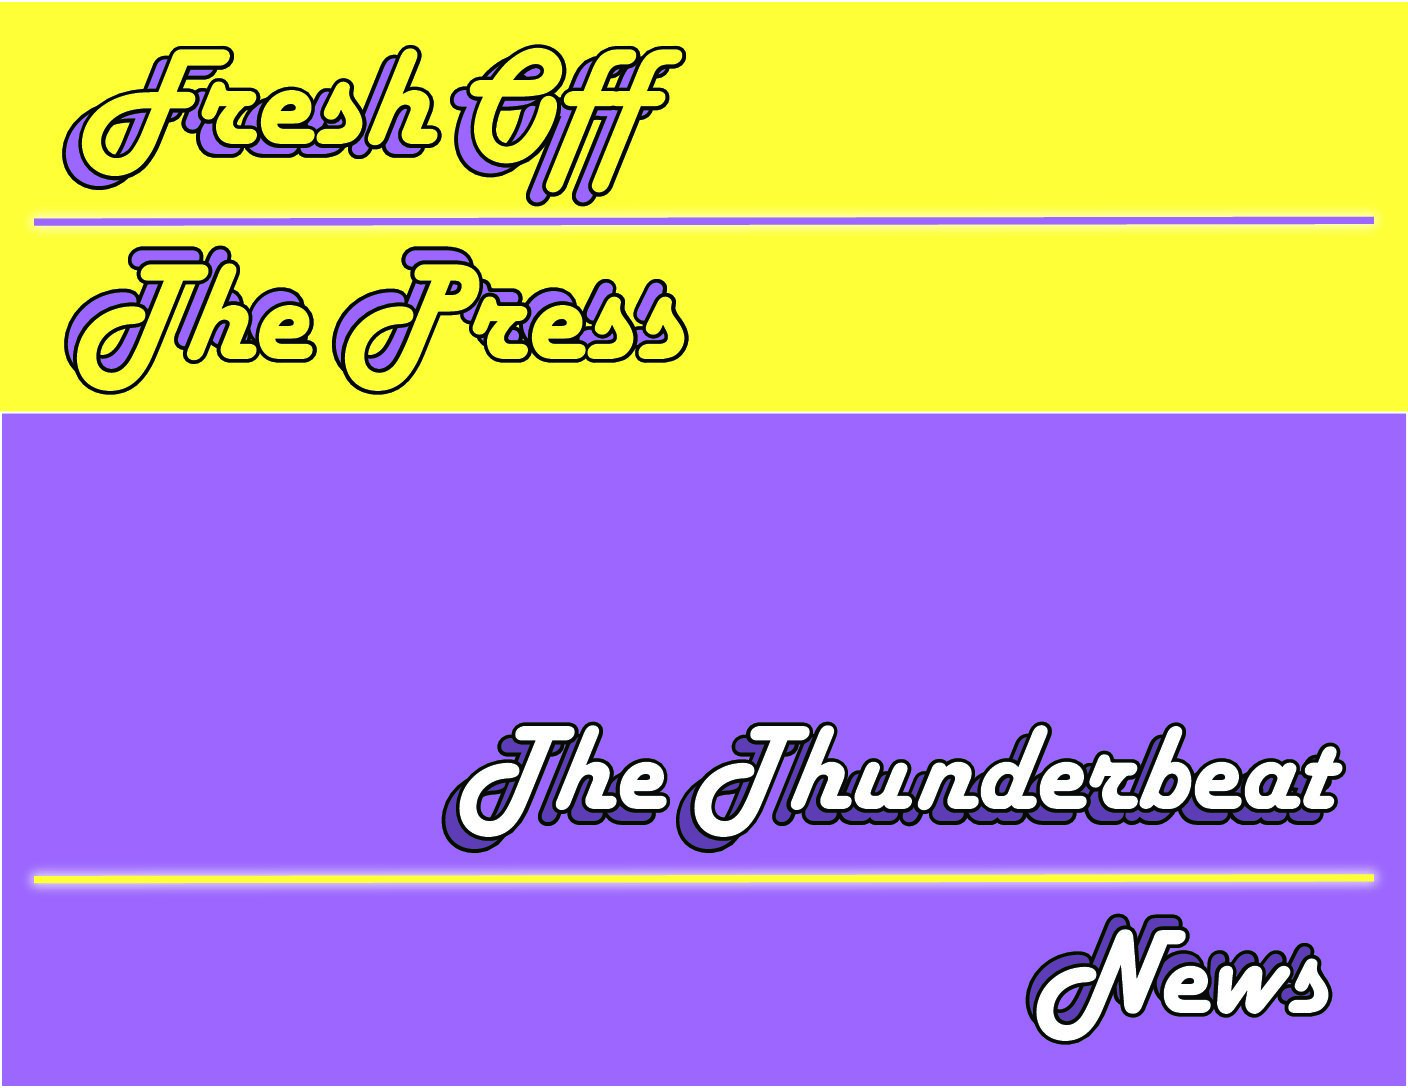 The Thunderbeat presents the weekly news with Trevor Slachetka